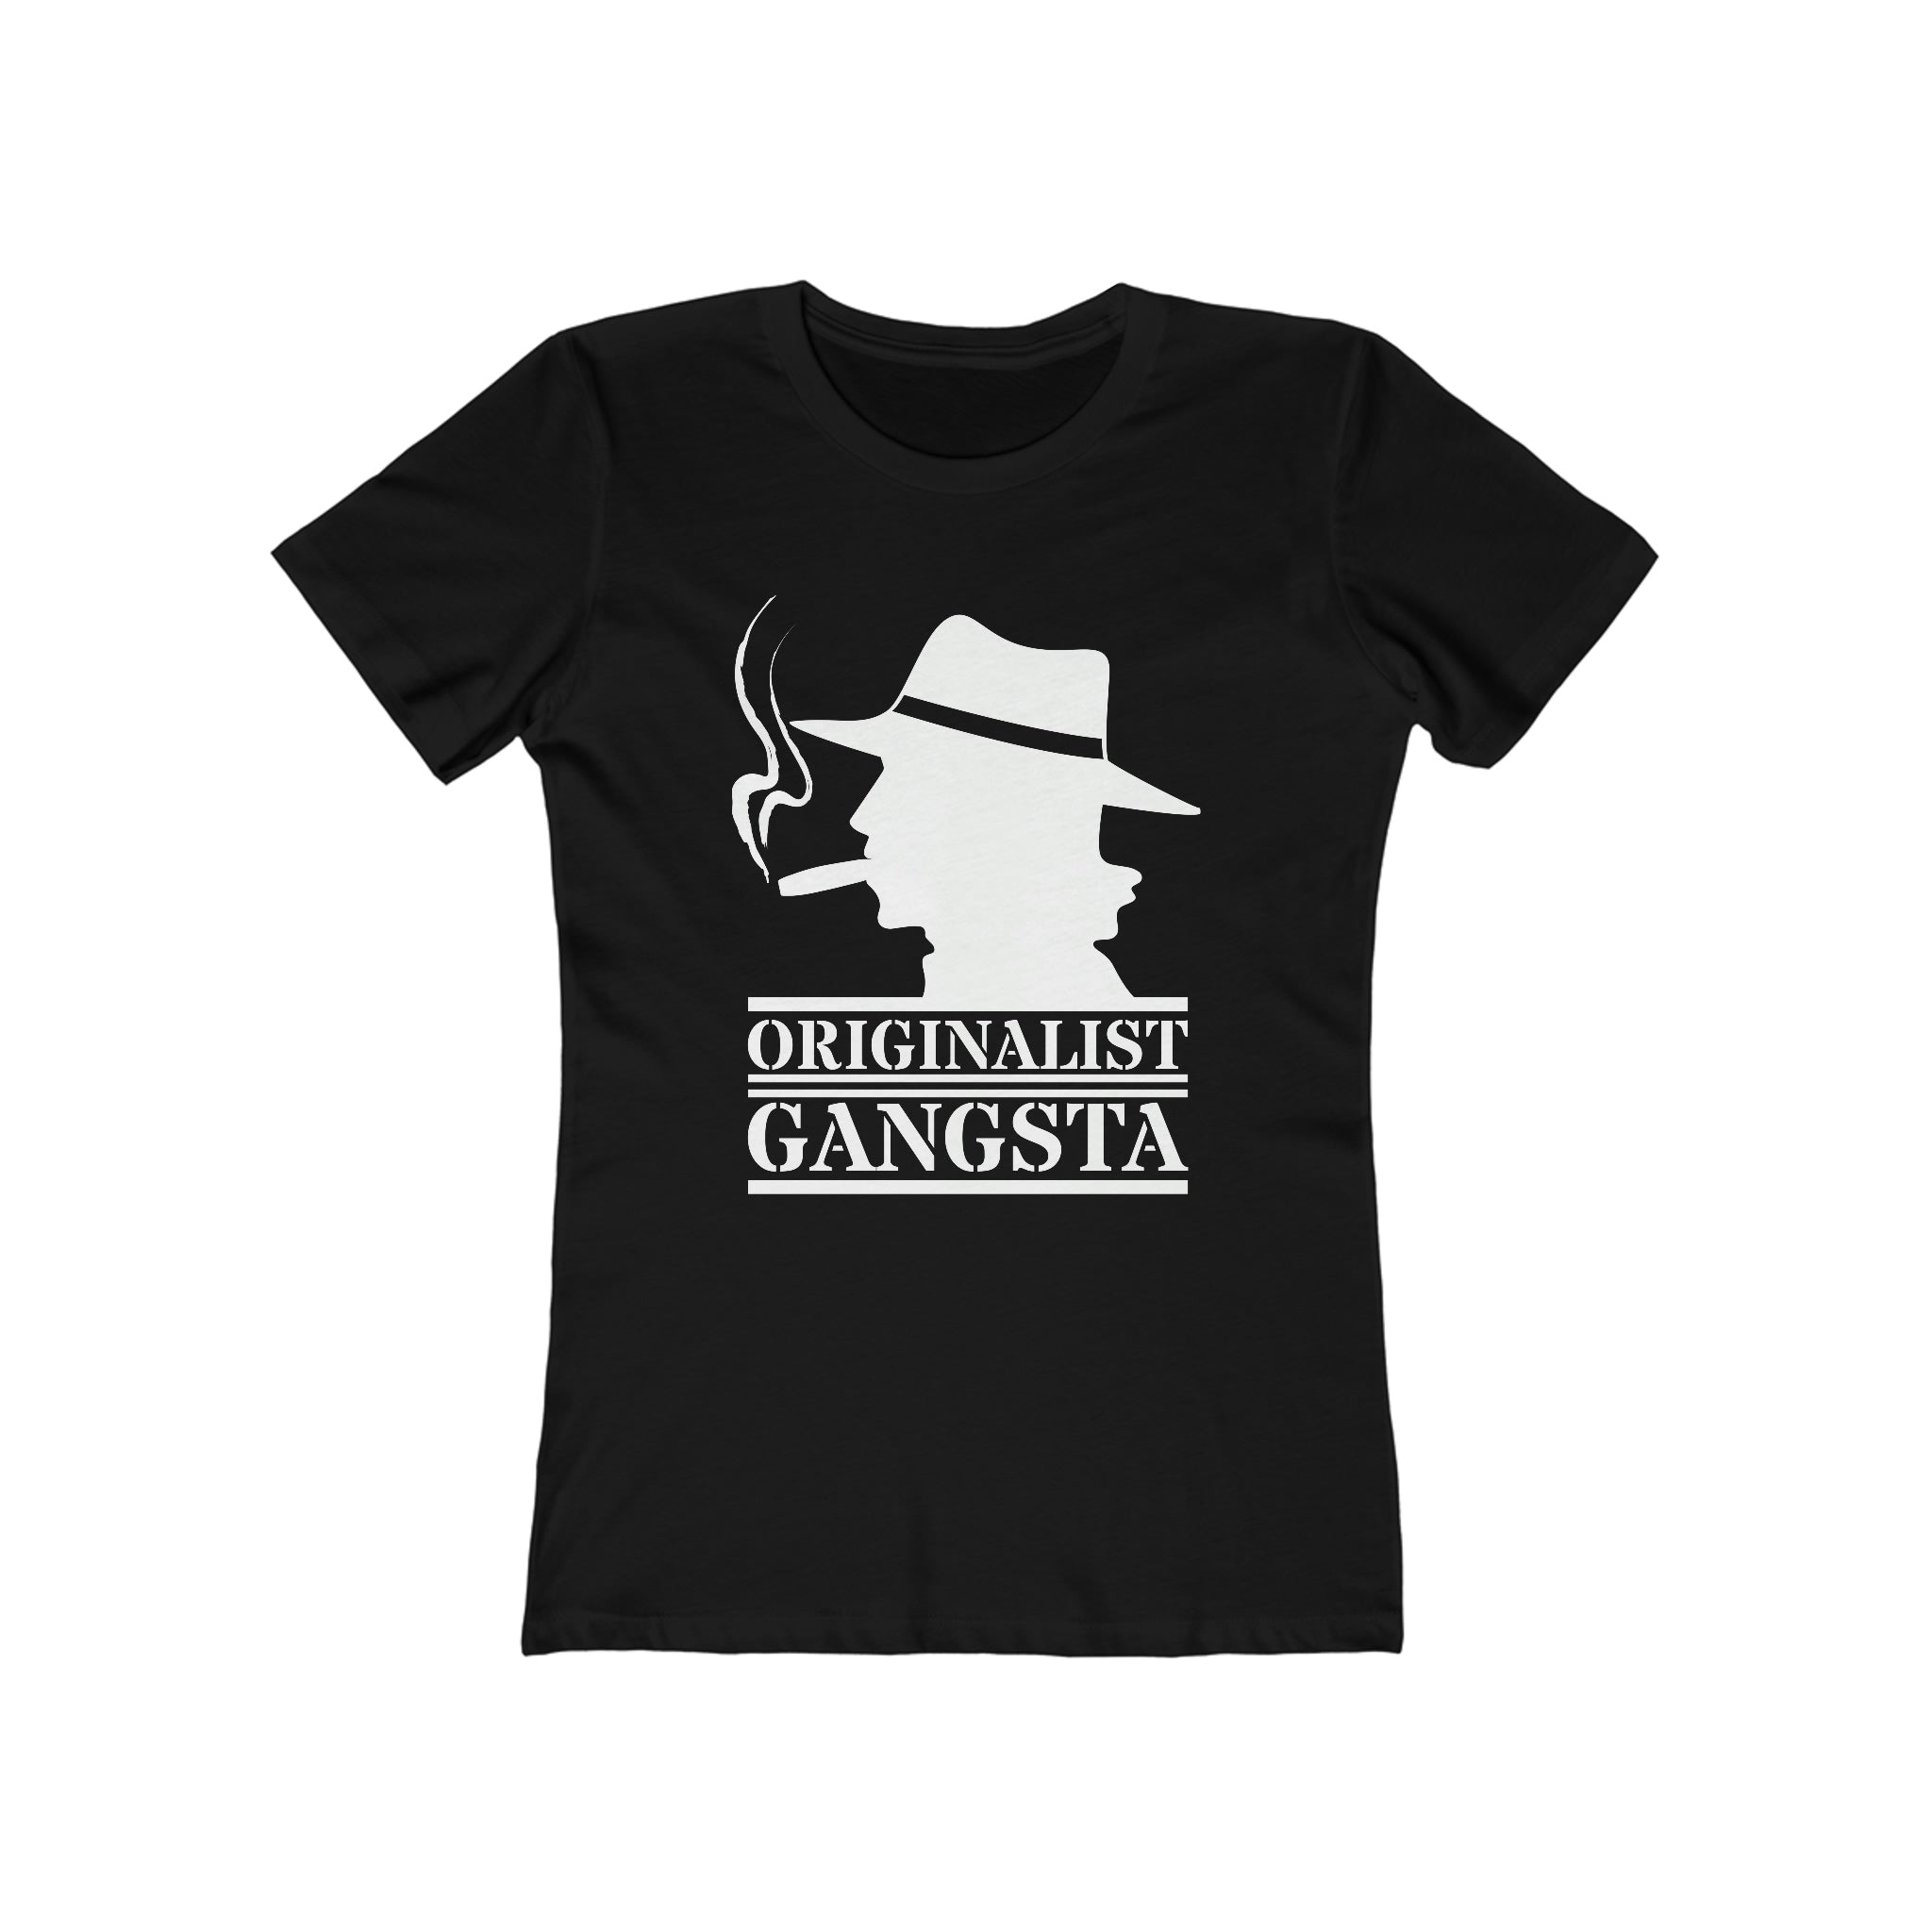 Originalist Gangsta Women's Shirt (Fed Soc)